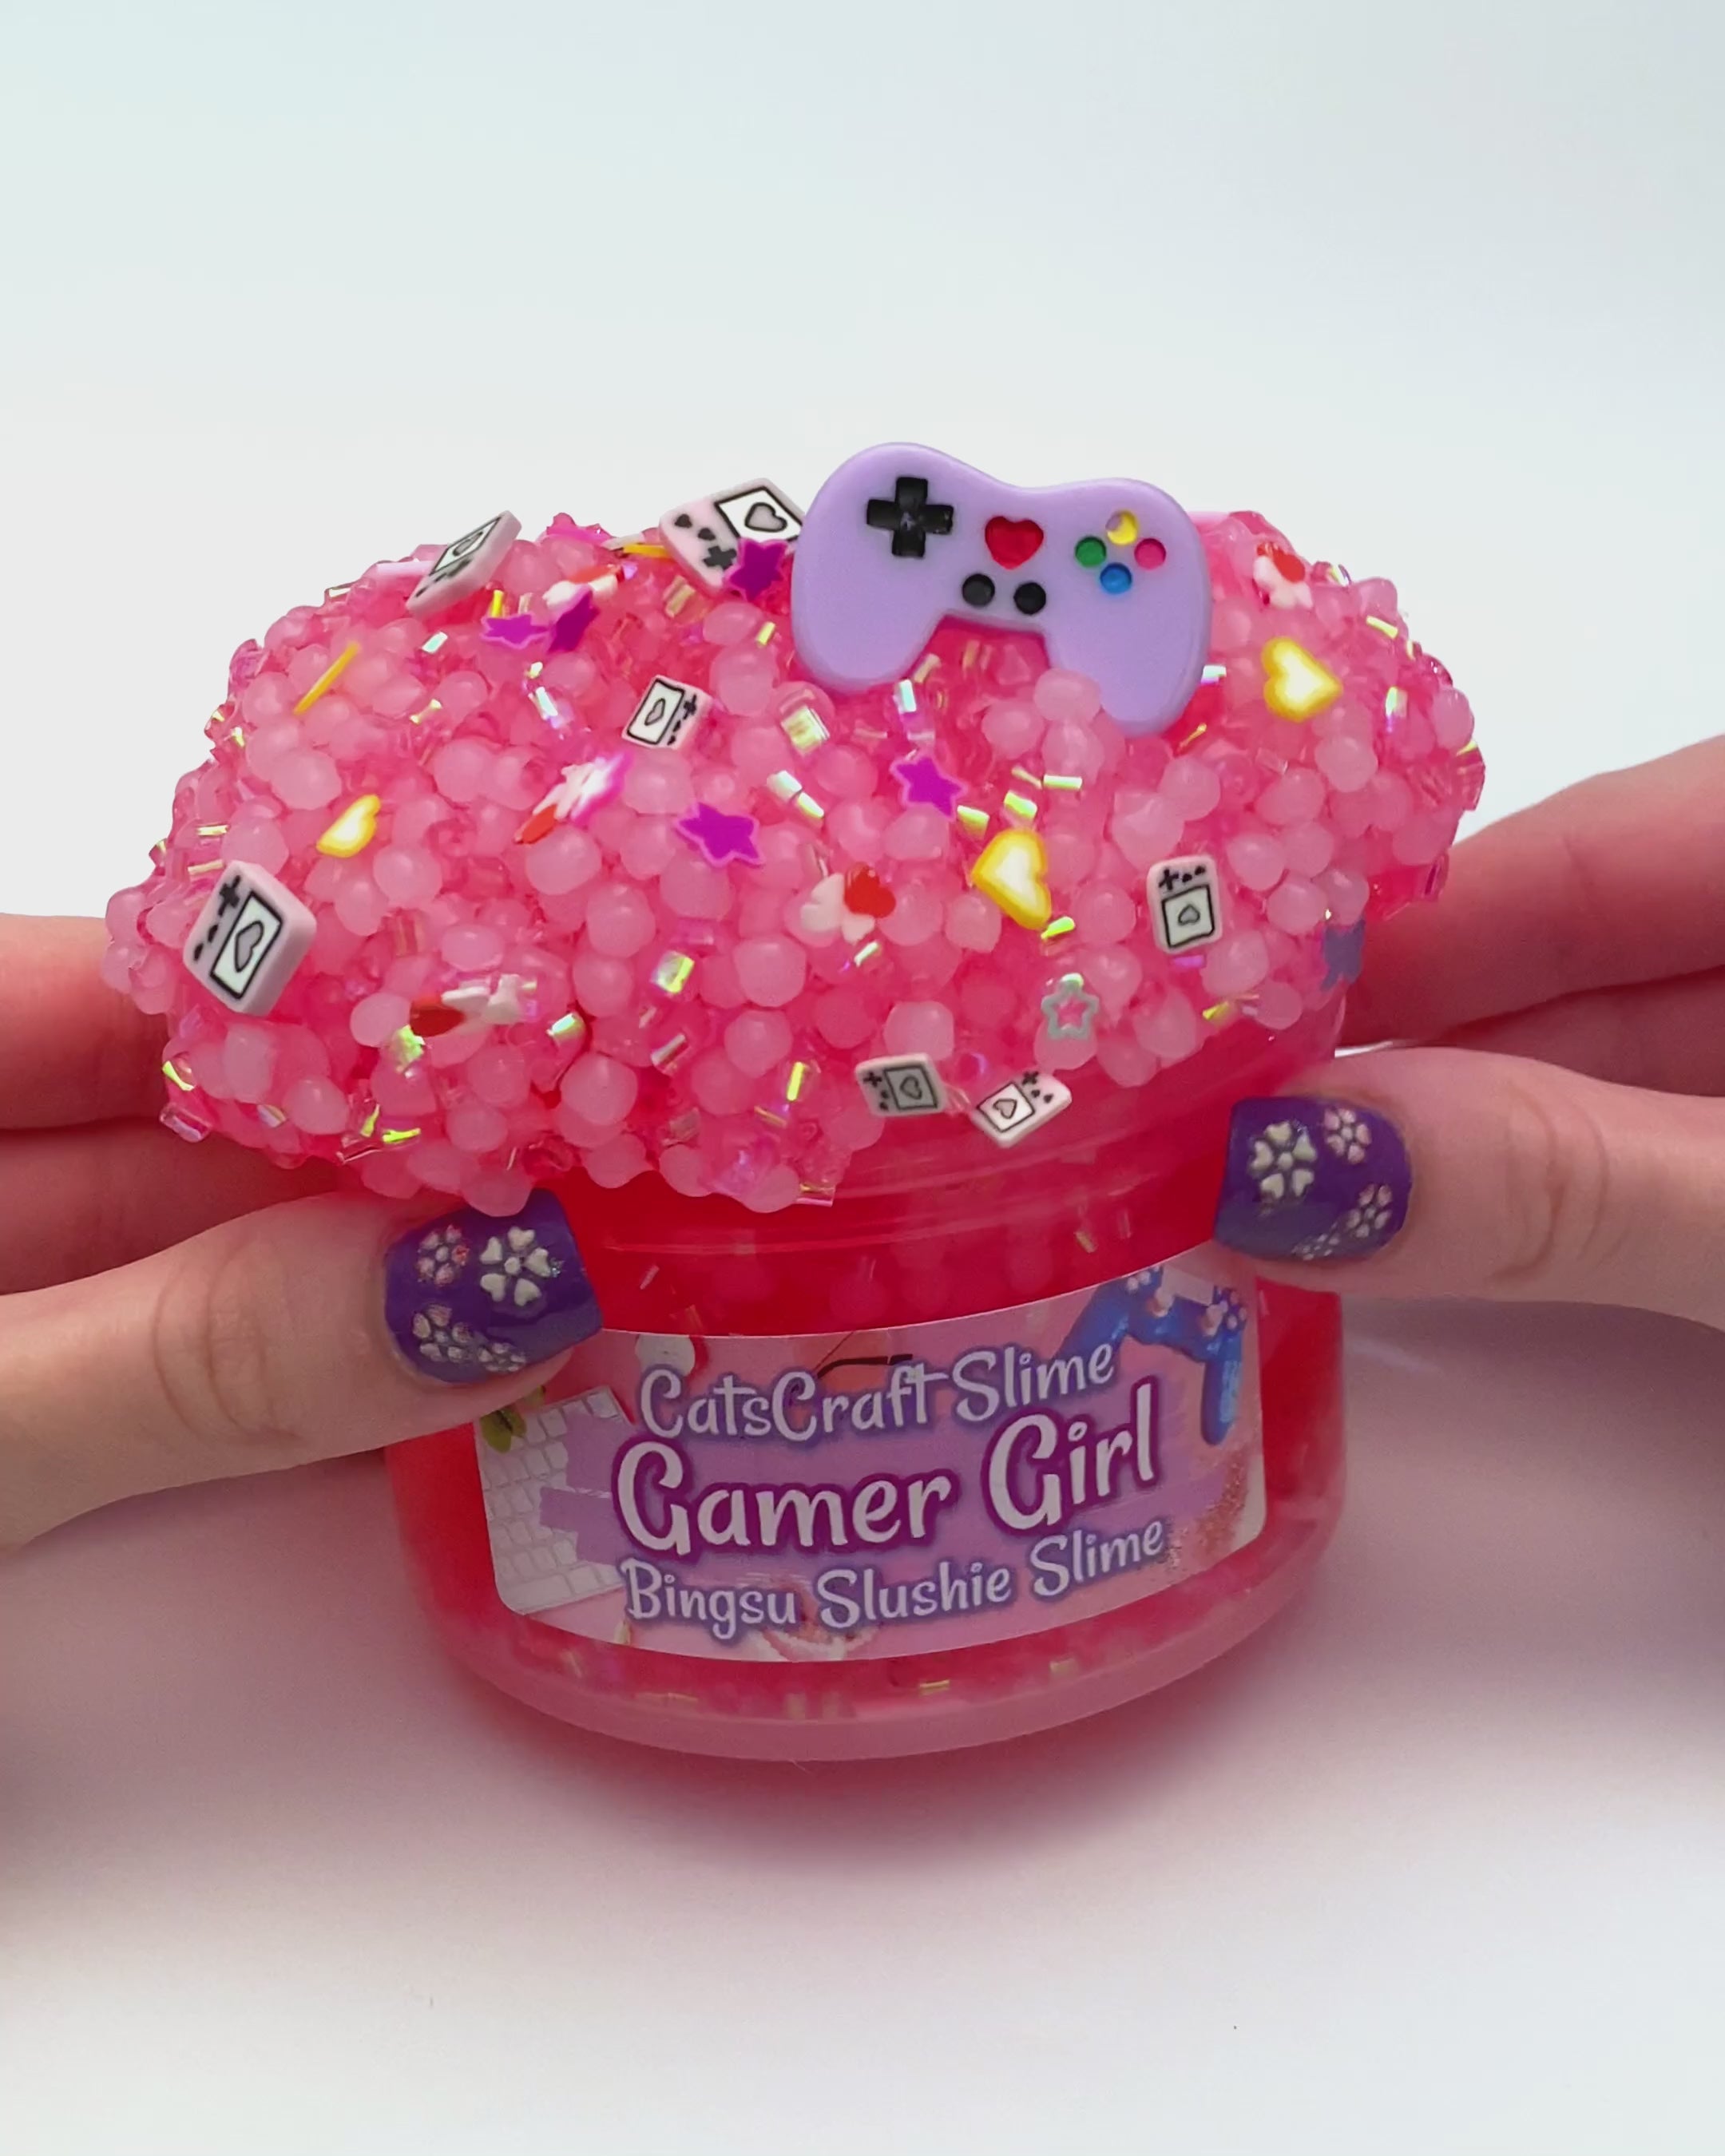 Bingsu Slushie Slime Gamer Girl SCENTED pink crystal clear bingsu an –  CatsCraftSlime